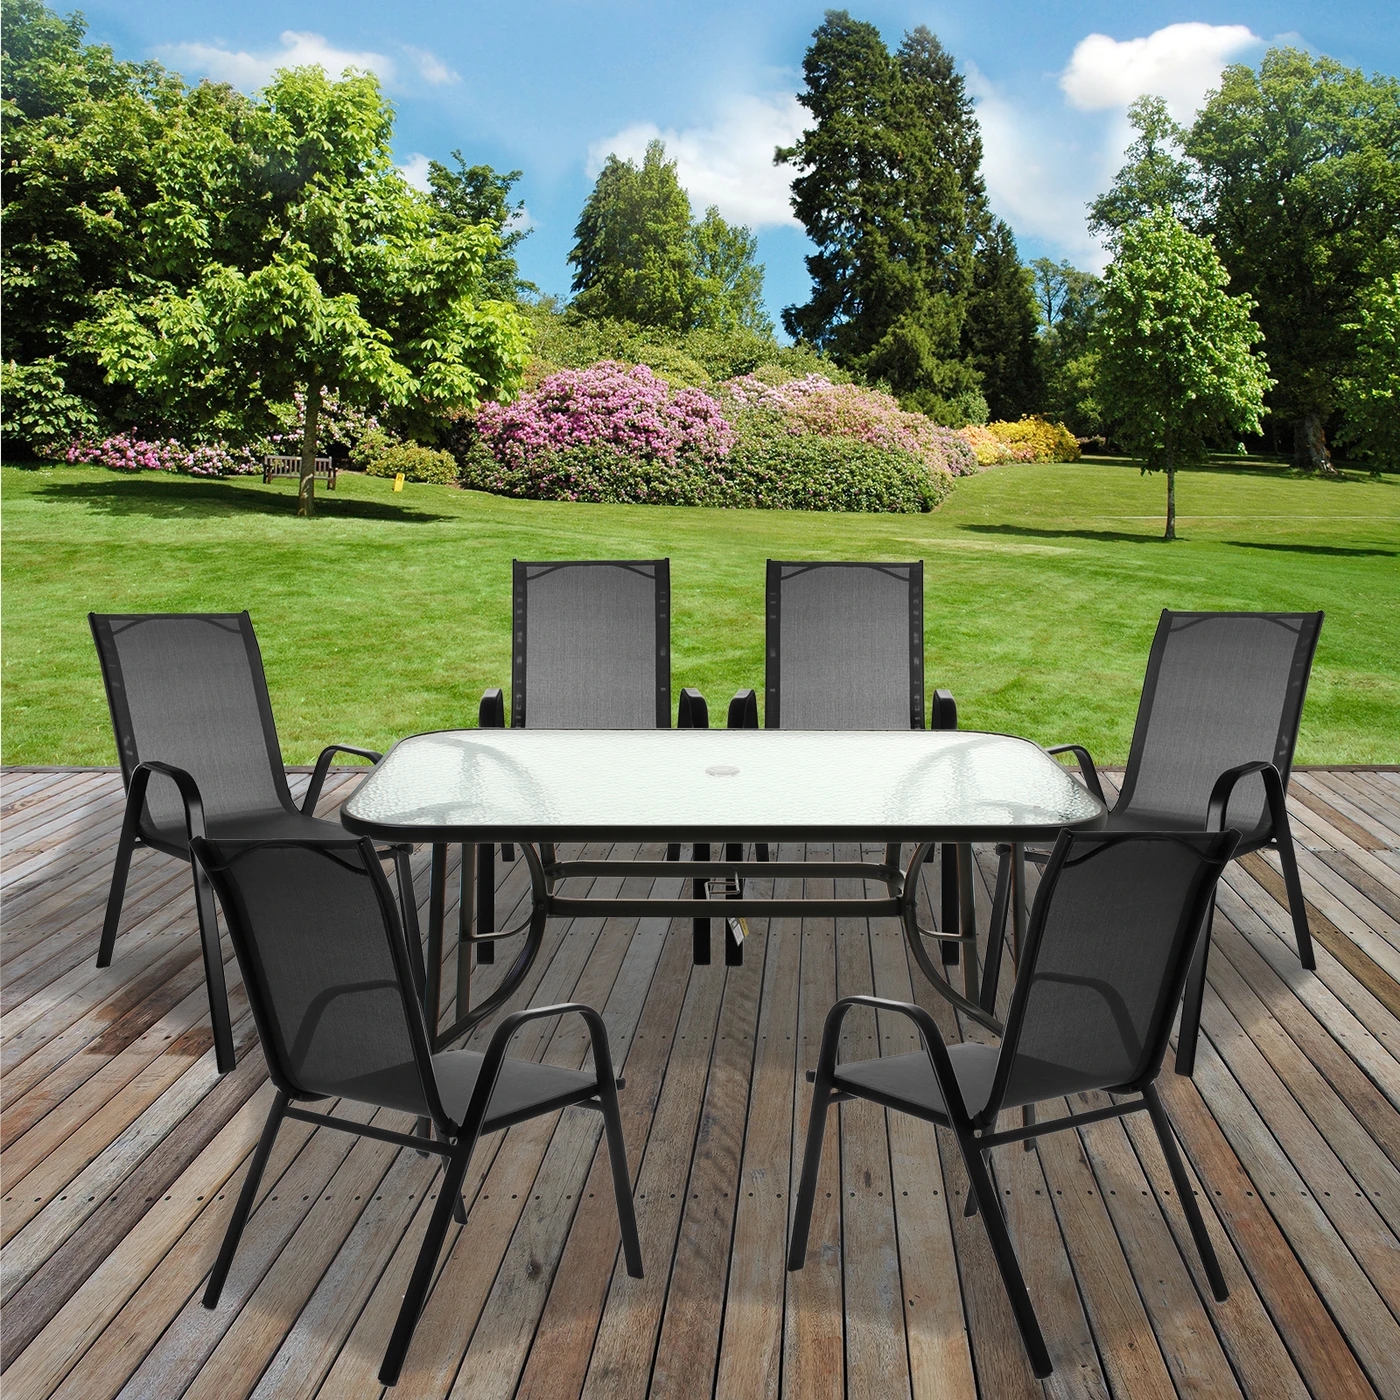 Outdoor Textoline Furniture villa courtyard garden table and chair furniture set